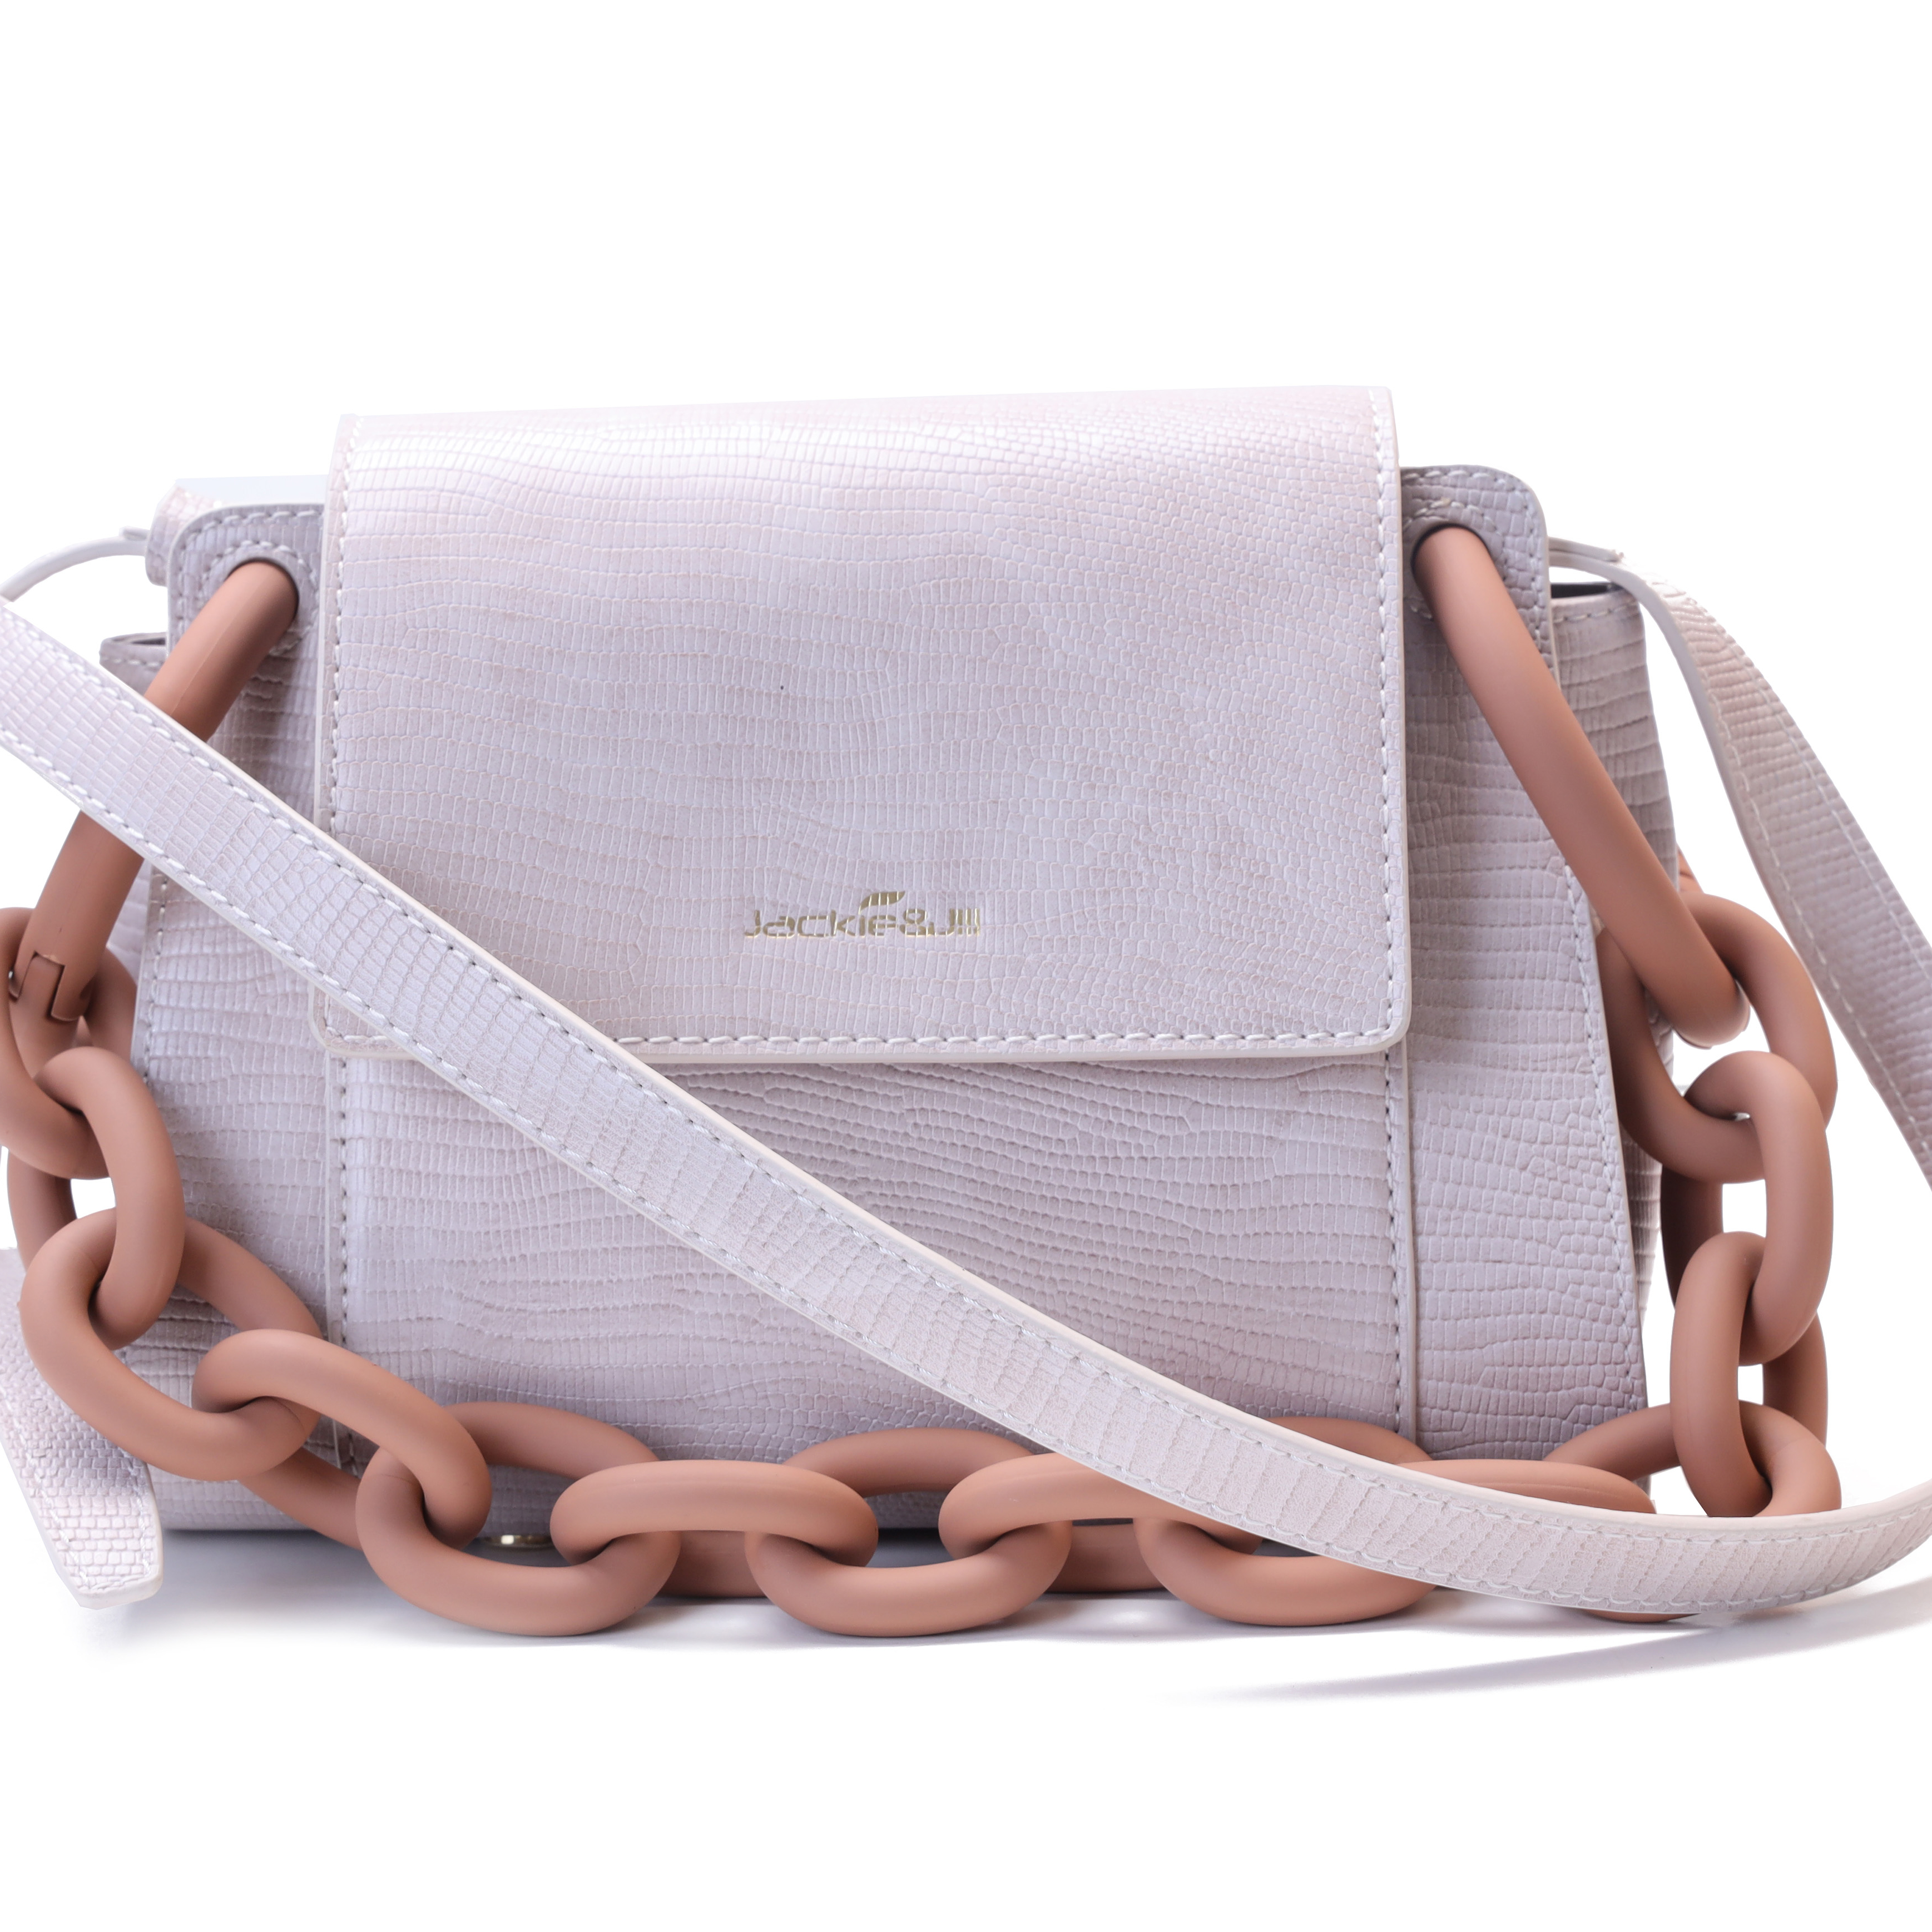 Newest Fashion Mini Girls Handbag PU Leather Bags for Women Cross-body Bags